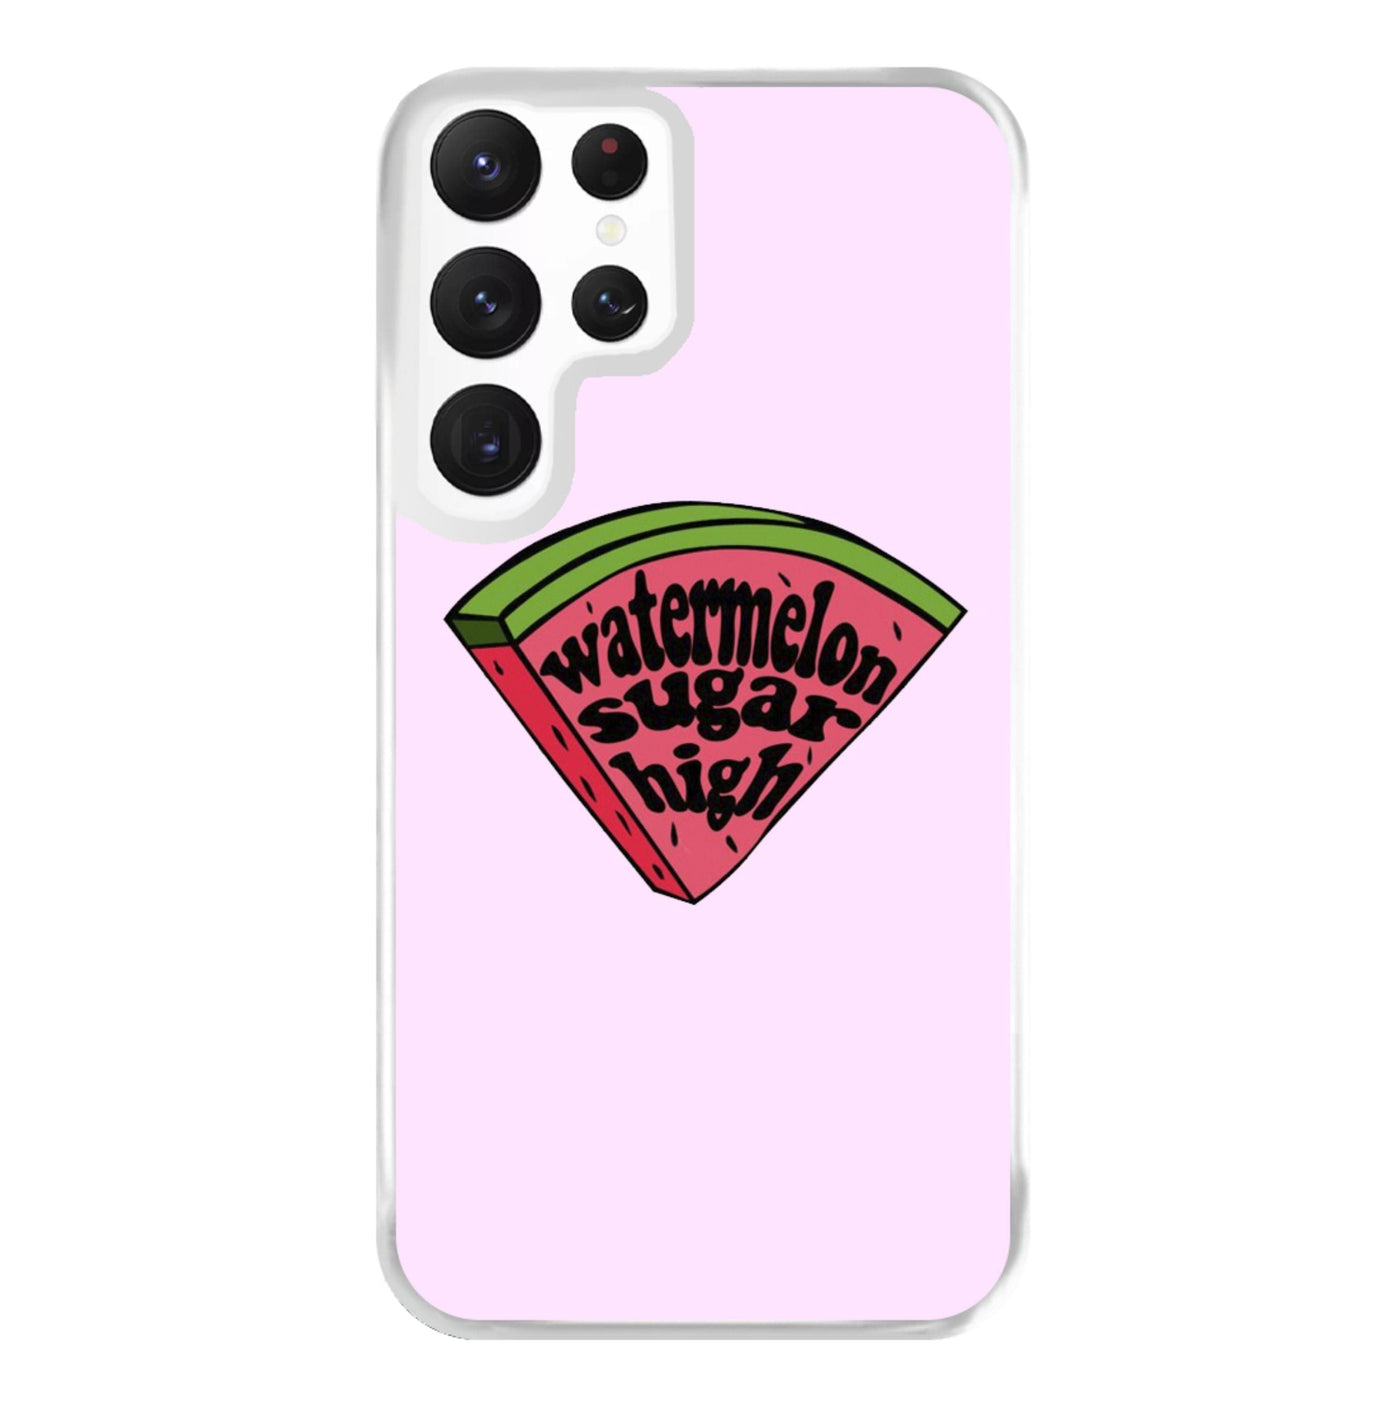 Watermelon Sugar High - Harry Phone Case